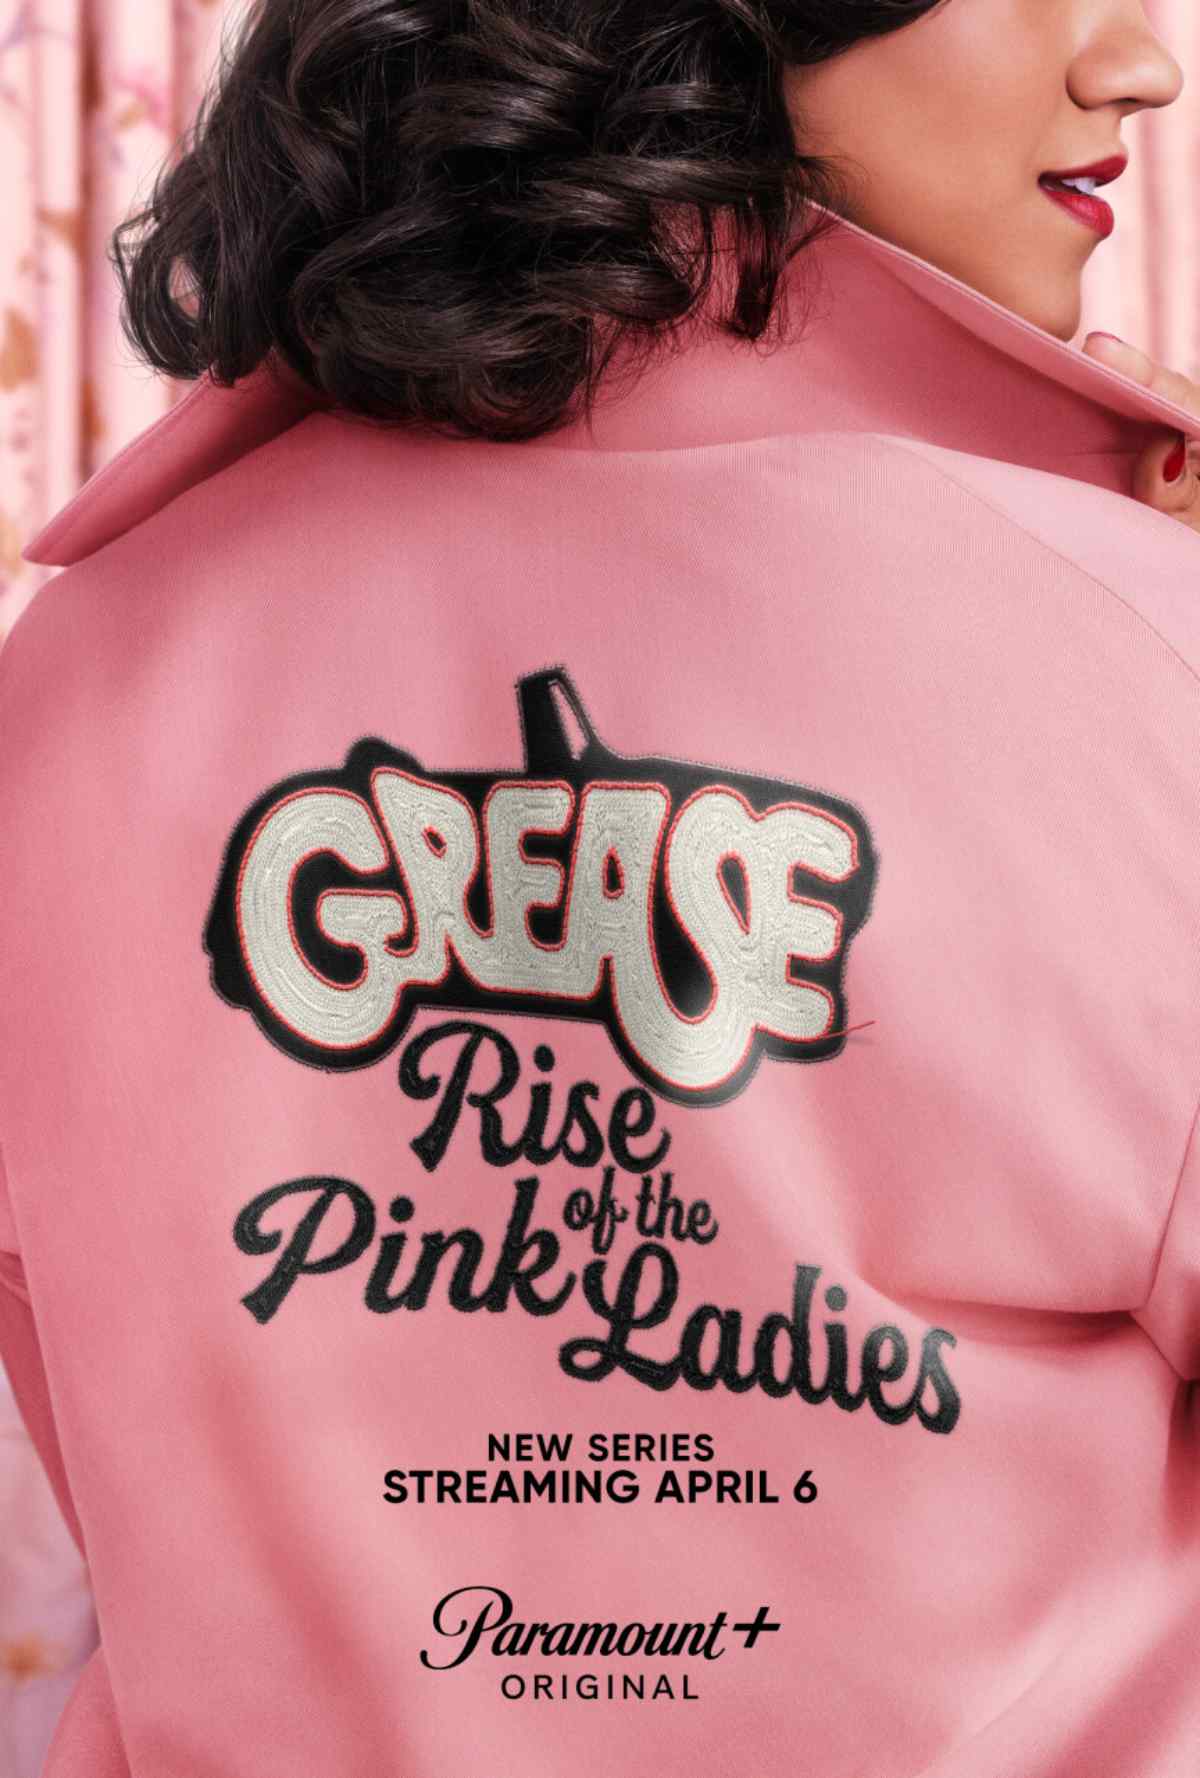 Pink Ladies Trailer Debuts